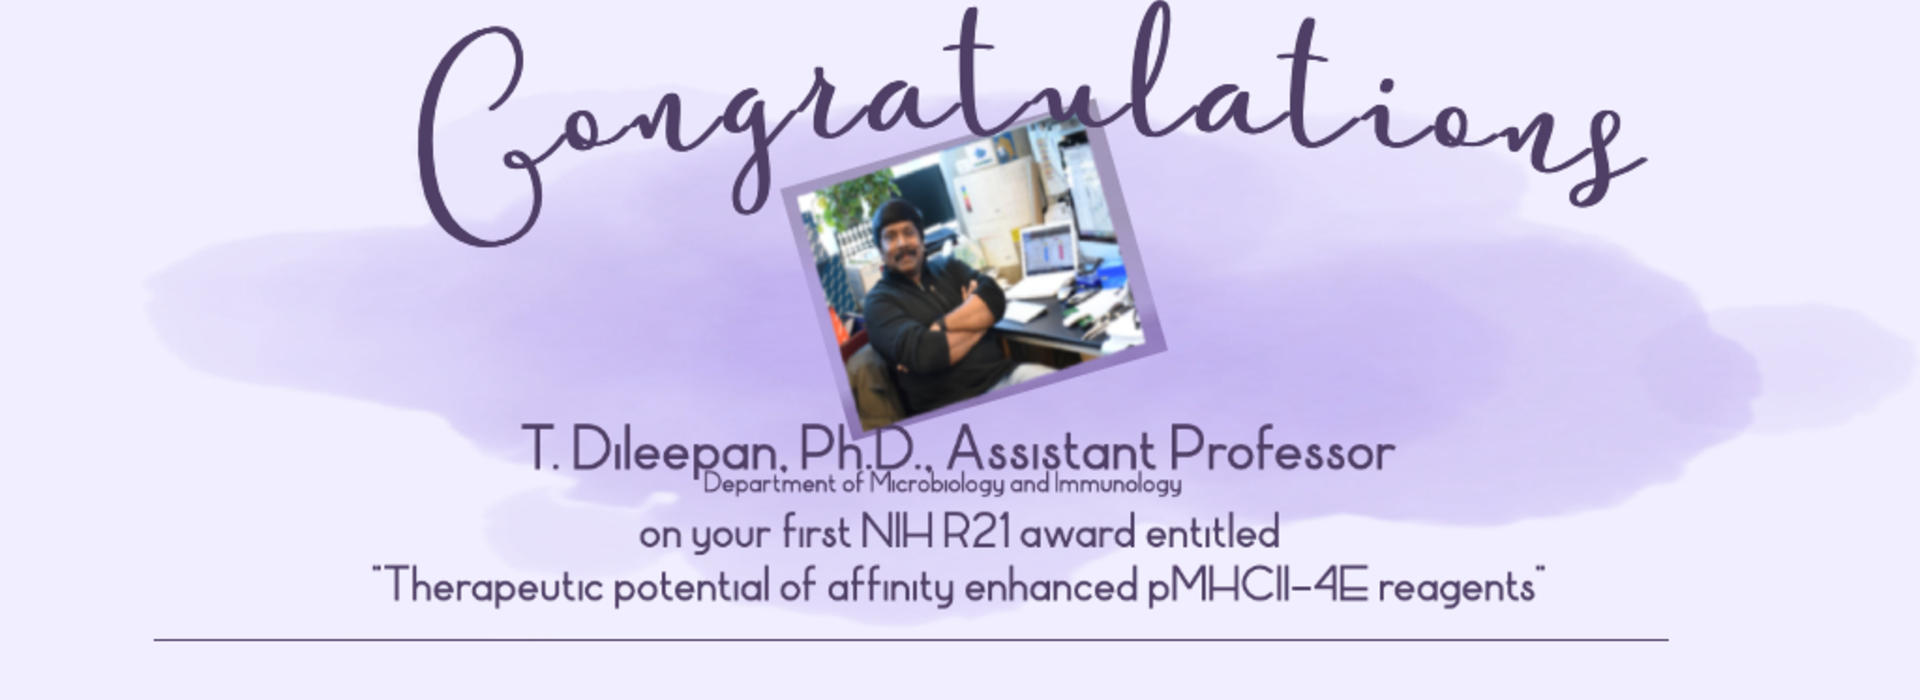 Congratulations T. Dileepan, Ph.D. on first R21 award